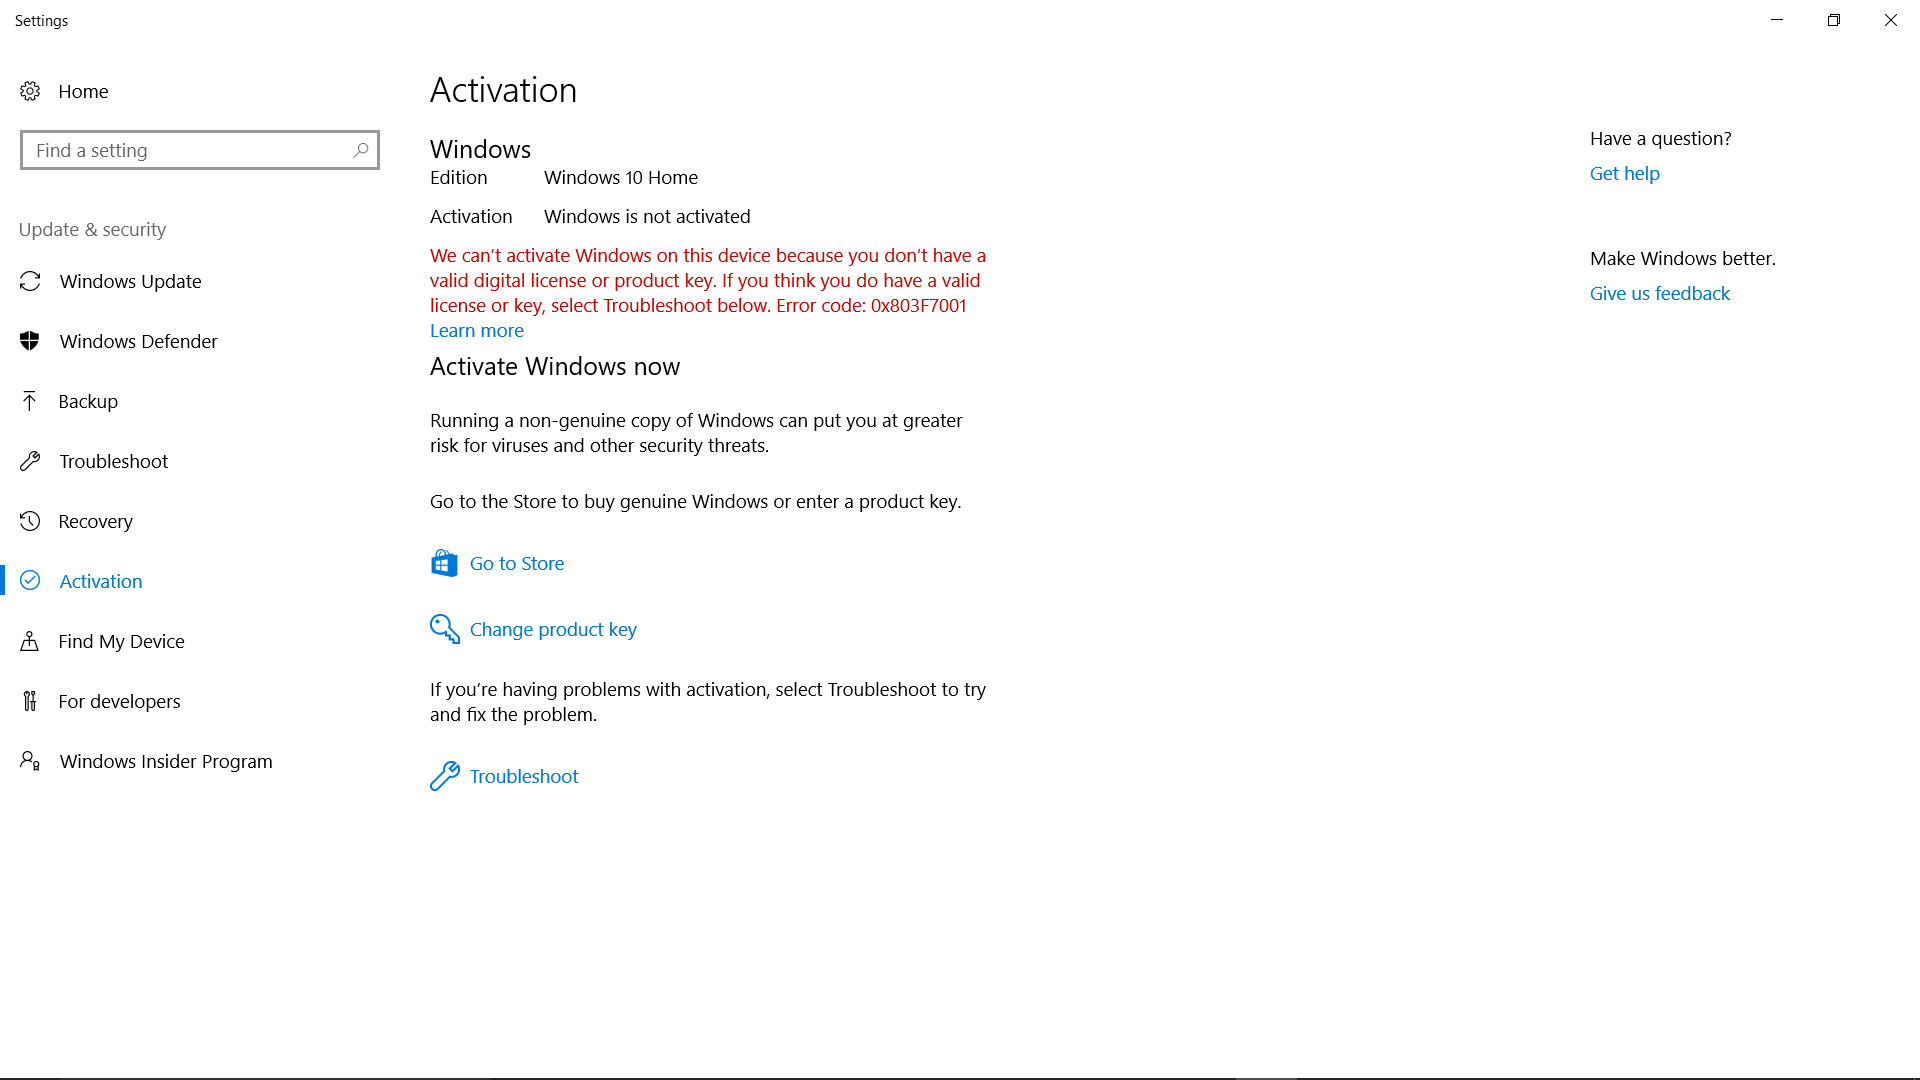 Asus S410un Invalid Windows 10 Key? 153c88e6-a6a7-47f9-b207-ce57fc0e96b2?upload=true.png